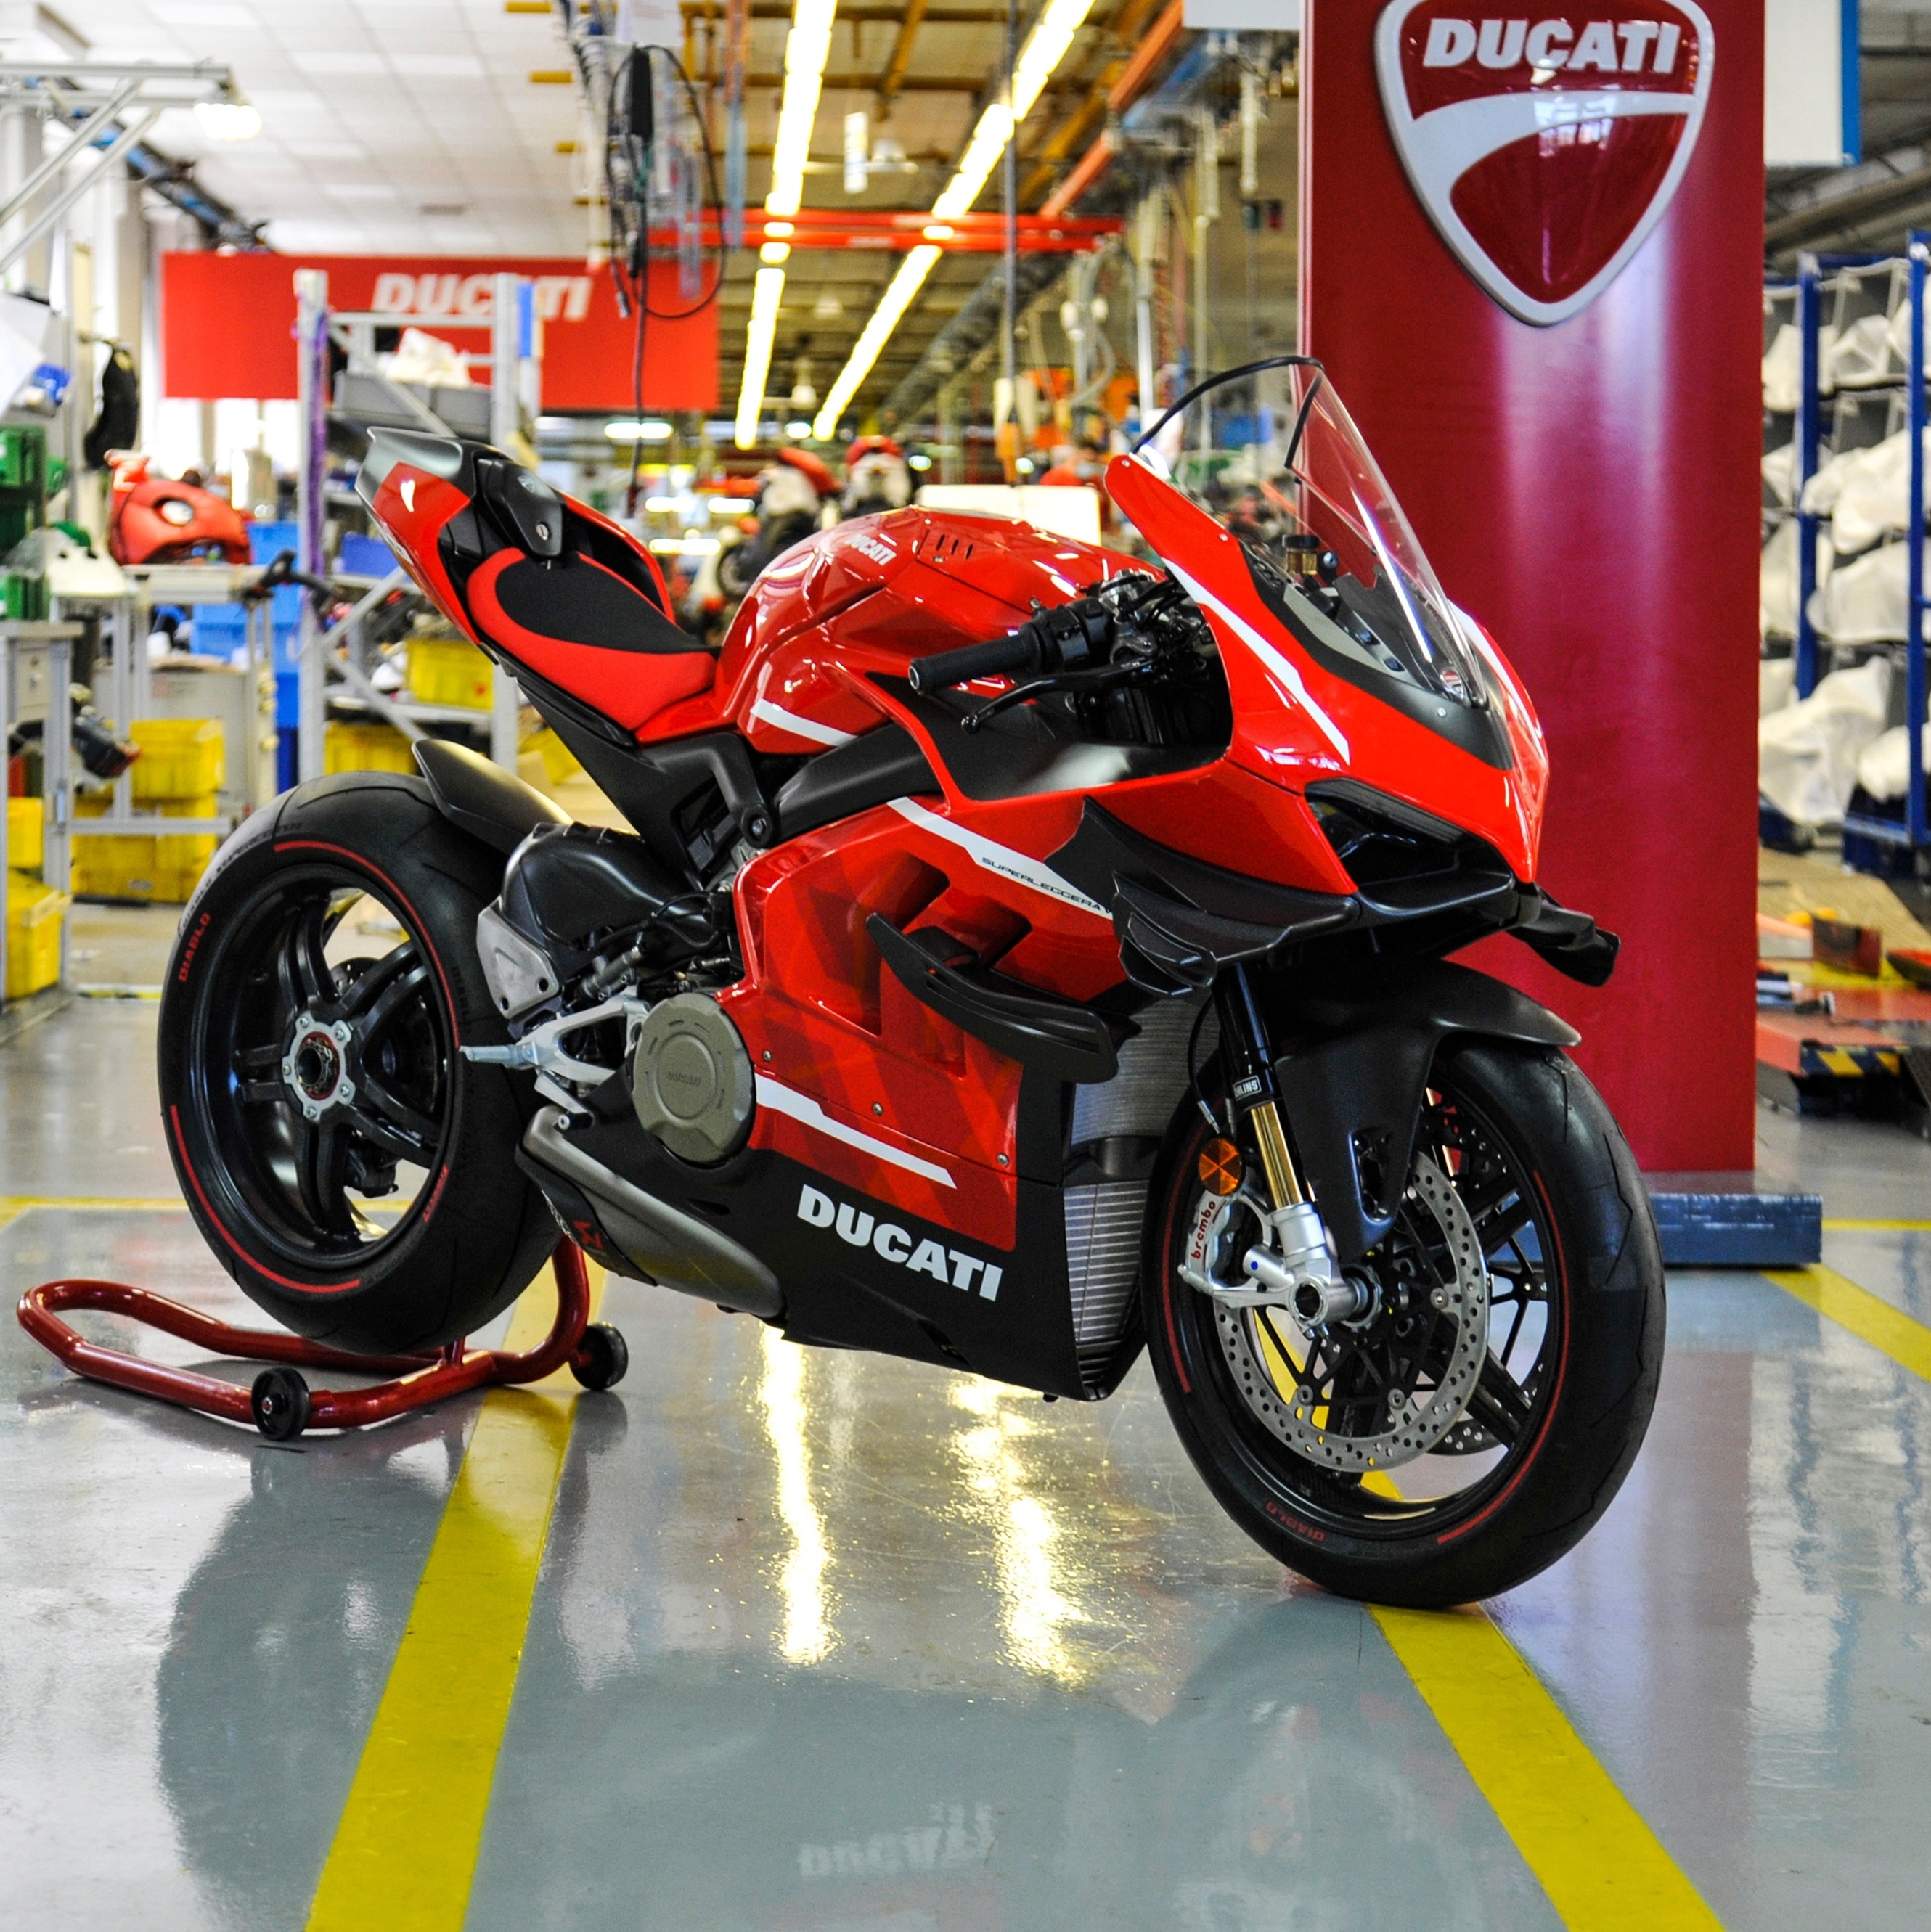 Veja as 10 motos mais caras do Brasil; Ducati de R$ 700 mil lidera